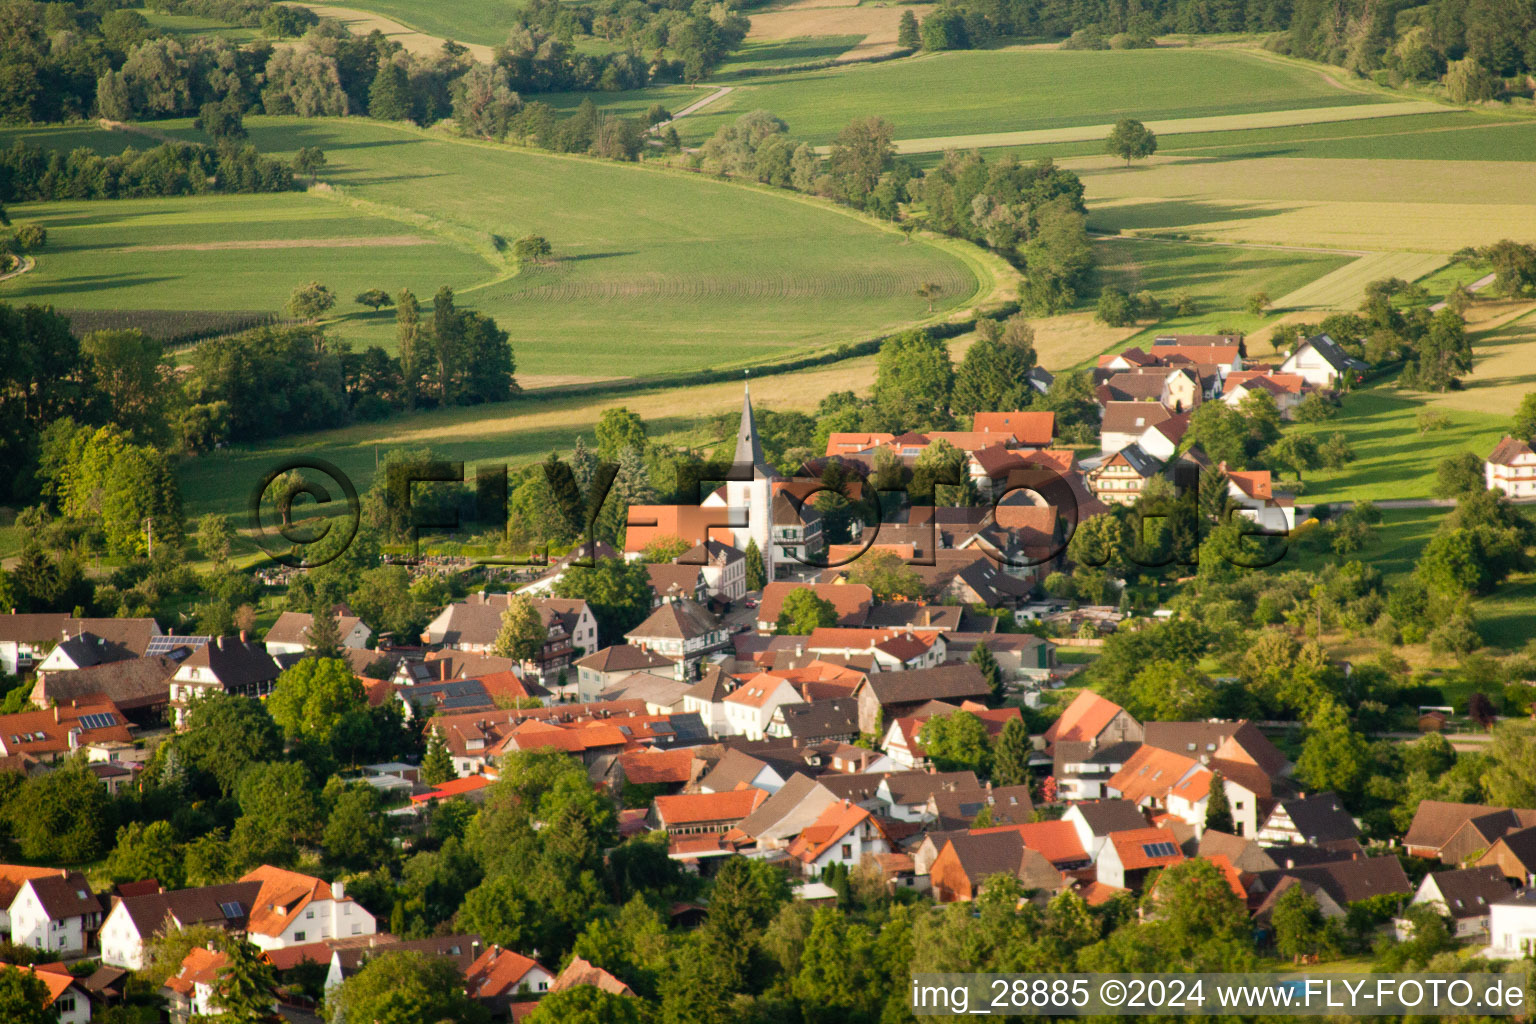 Aerial view of Village view in the district Diersheim in Rheinau in the state Baden-Wurttemberg